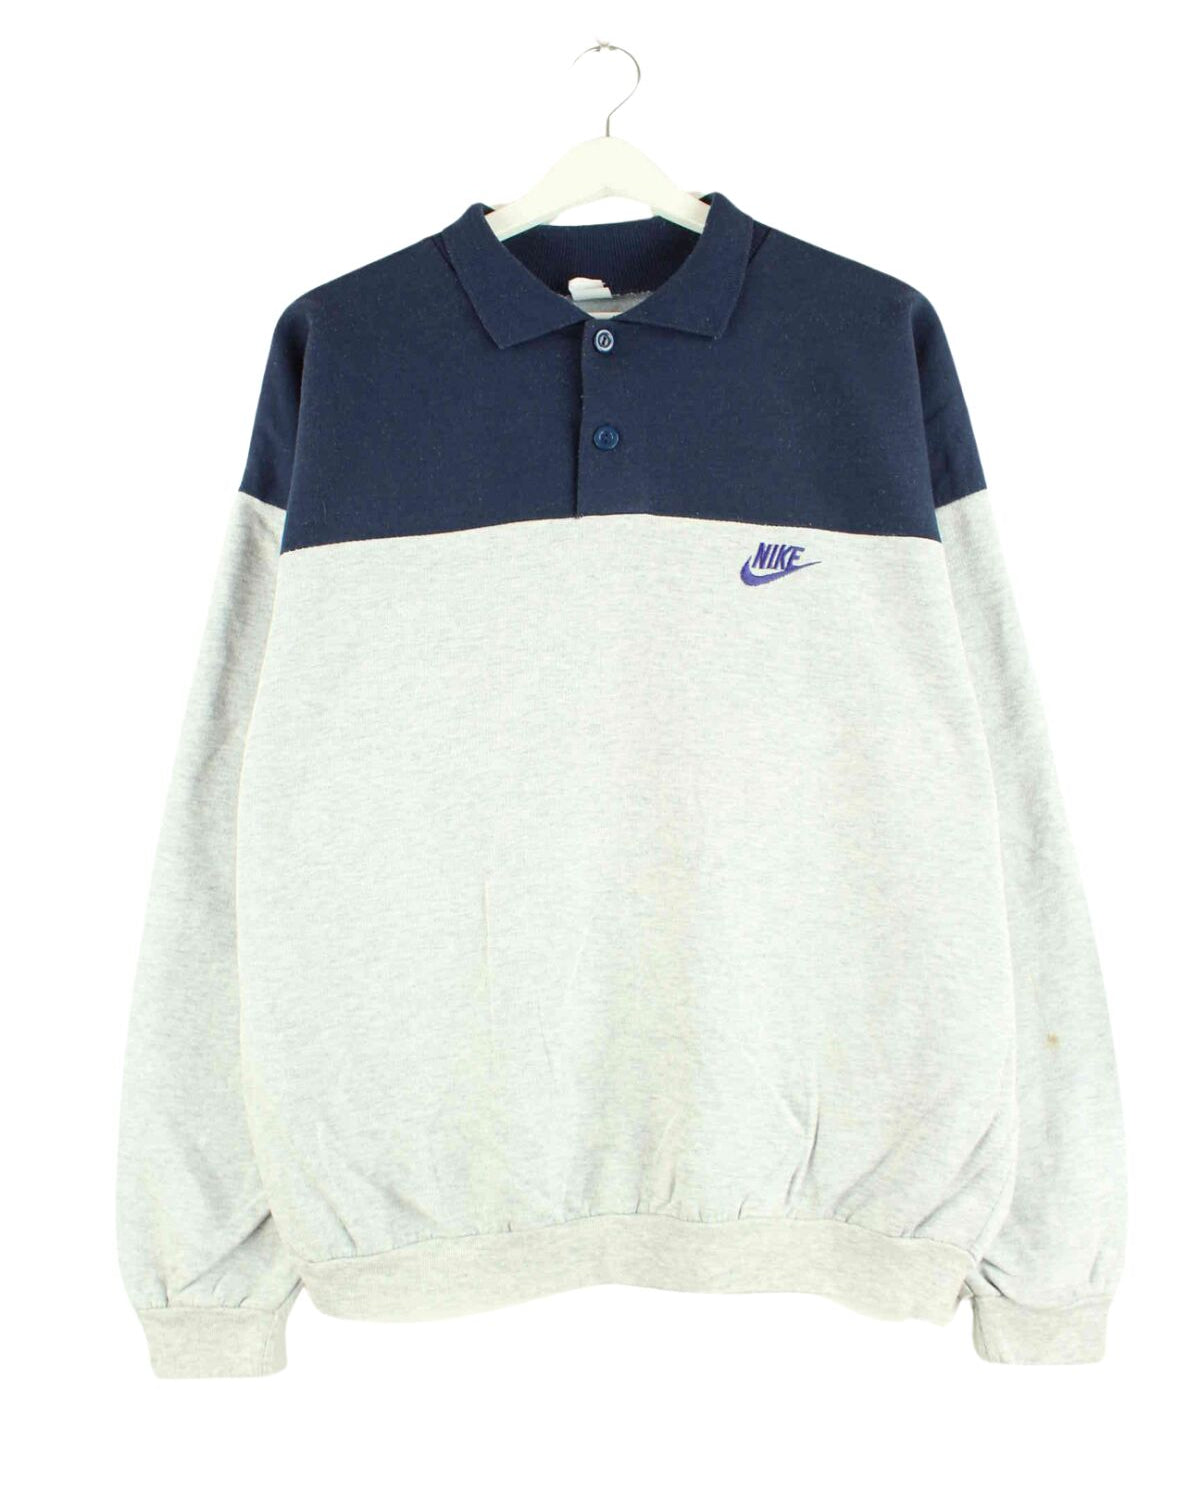 Nike 80s Vintage Polo Sweater Grau L (front image)